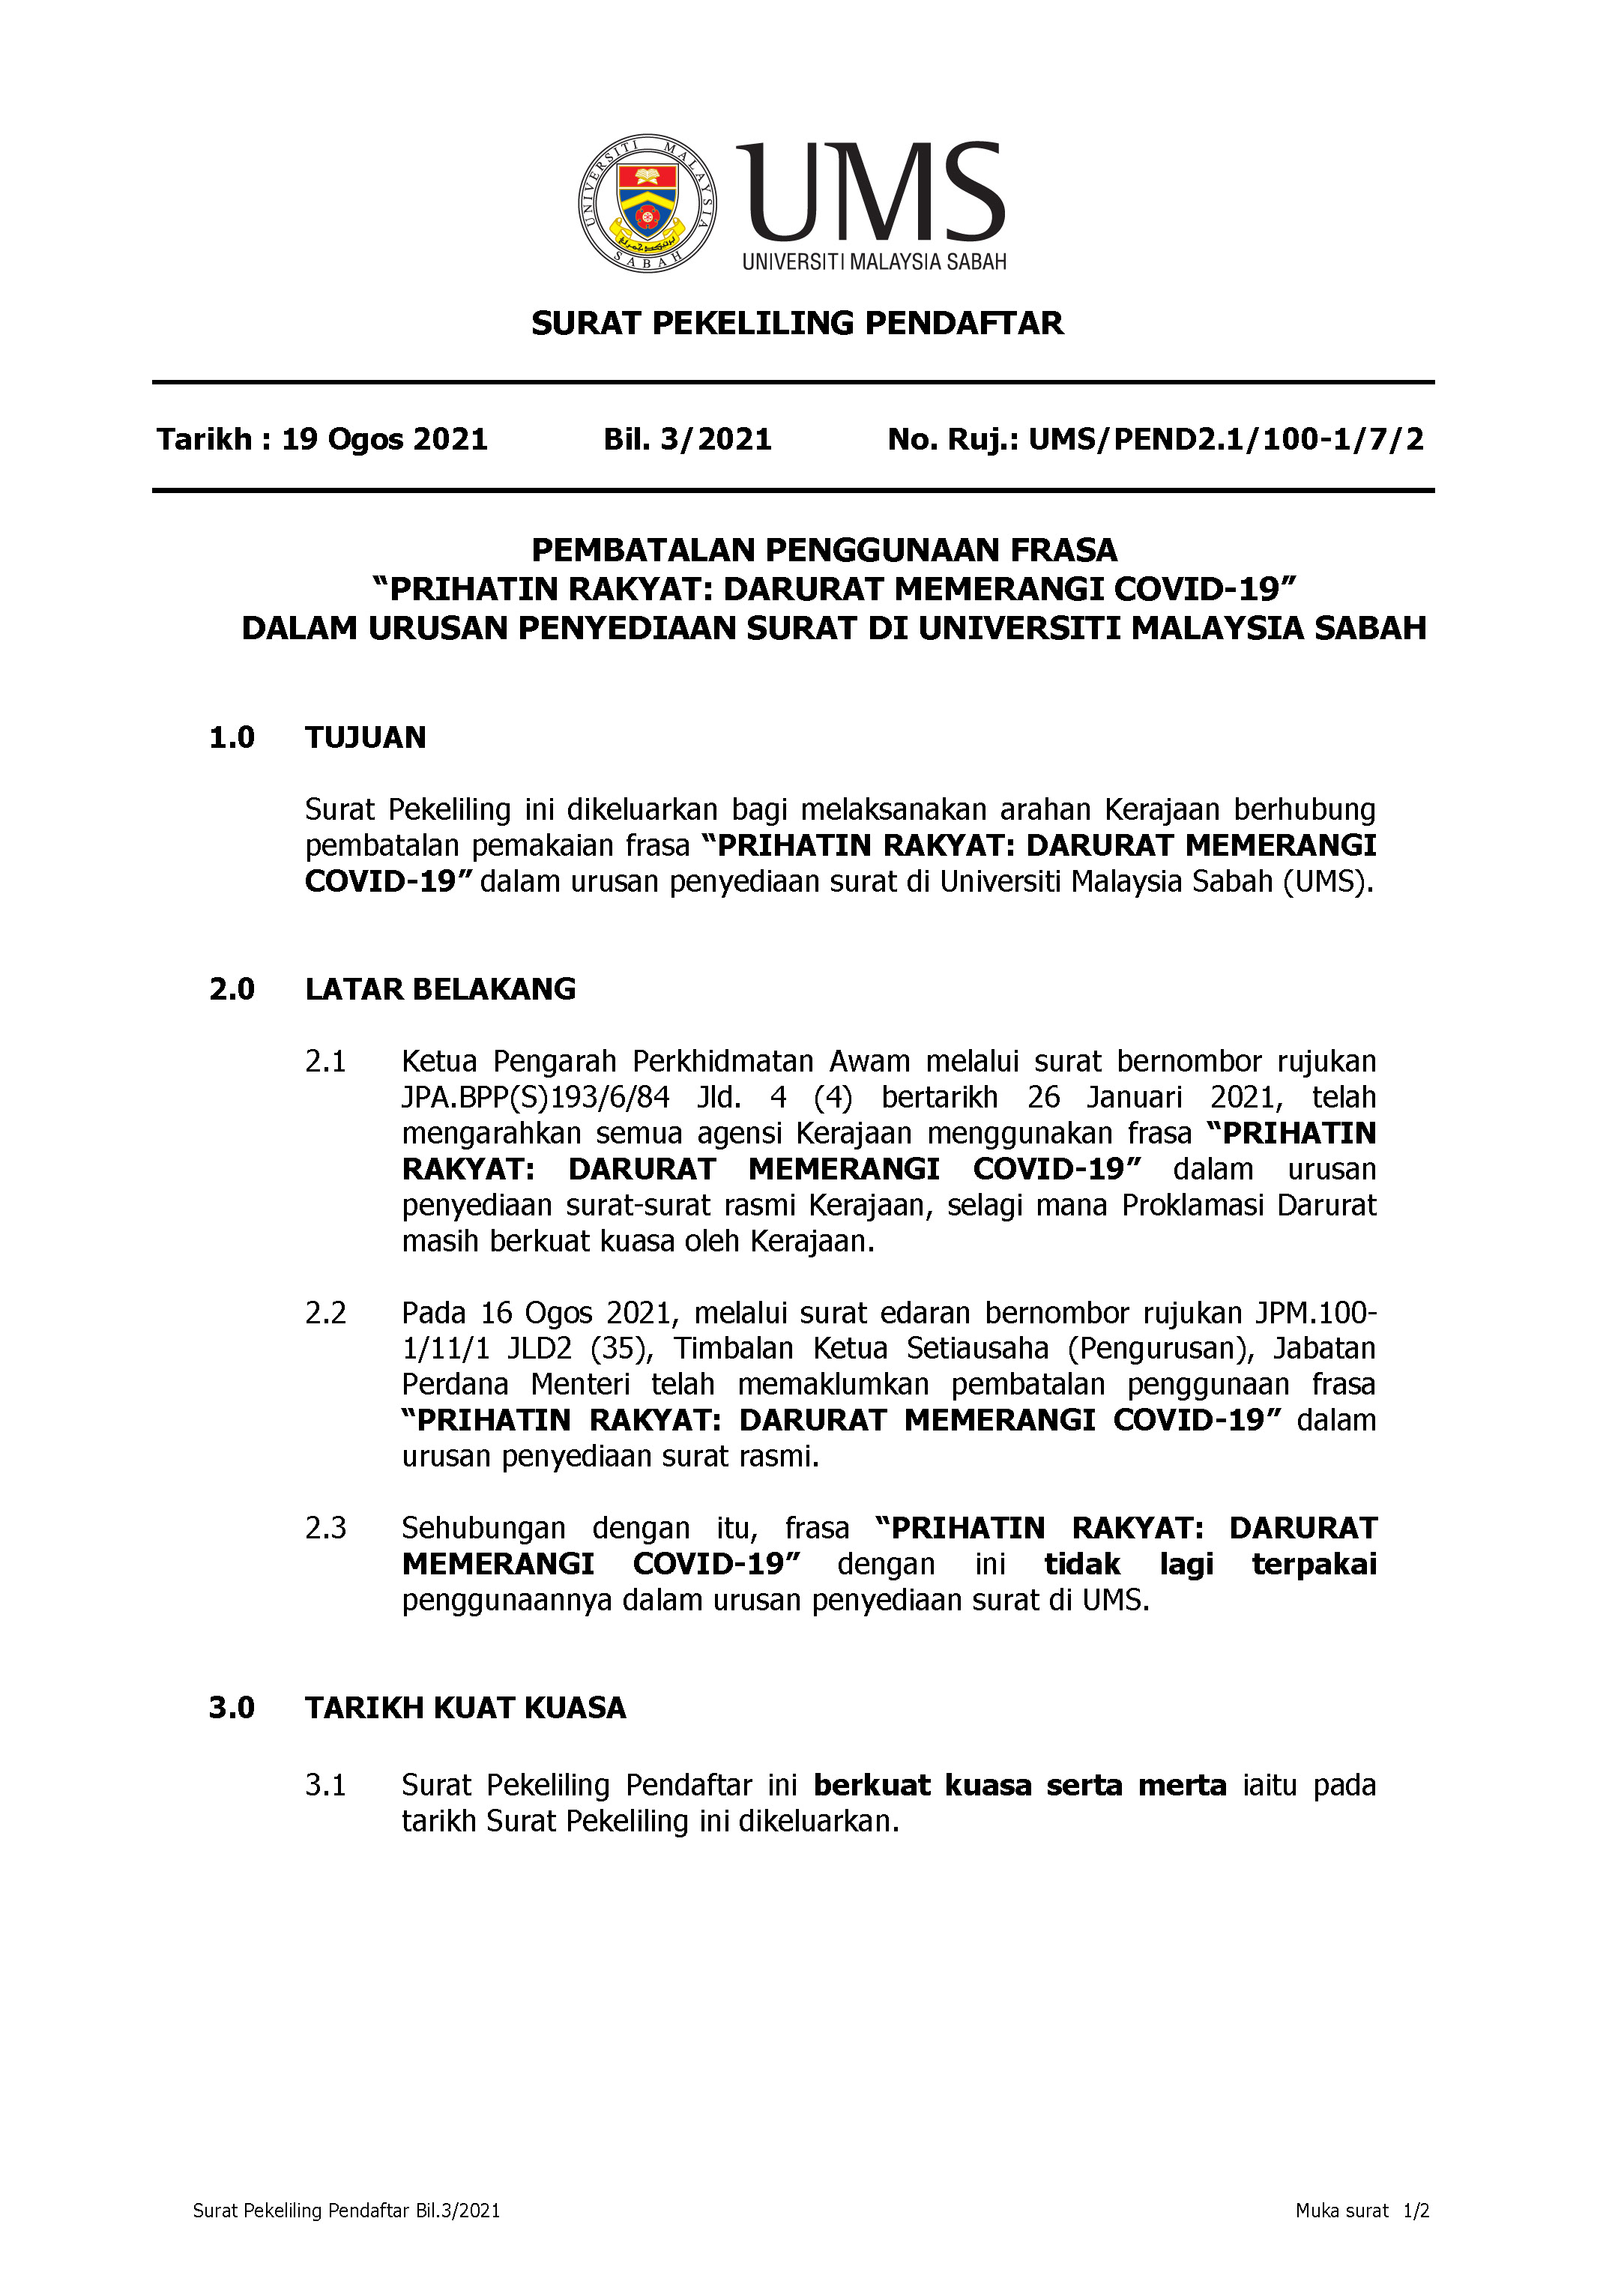 Pekeliling Pendaftar Bil 3 Tahun 2021 Pembatalan Penggunaan Frasa Prihatin Rakyat Darurat Memerangi Covid 19 Dalam Urusan Penyediaan Surat Di Ums